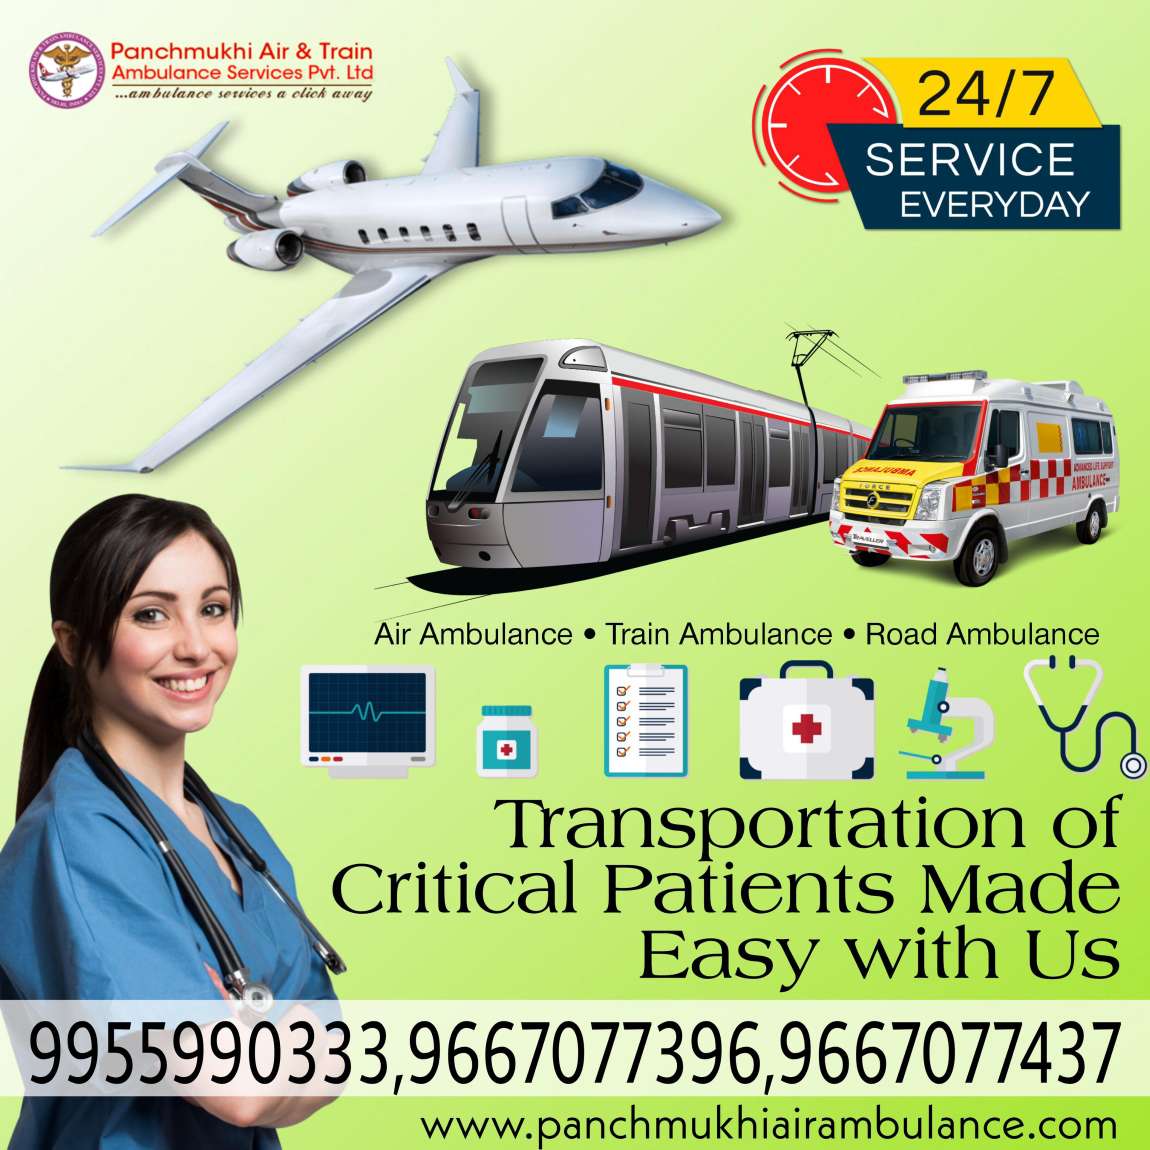 Air Ambulance Service in Mumbai with ICU Setup